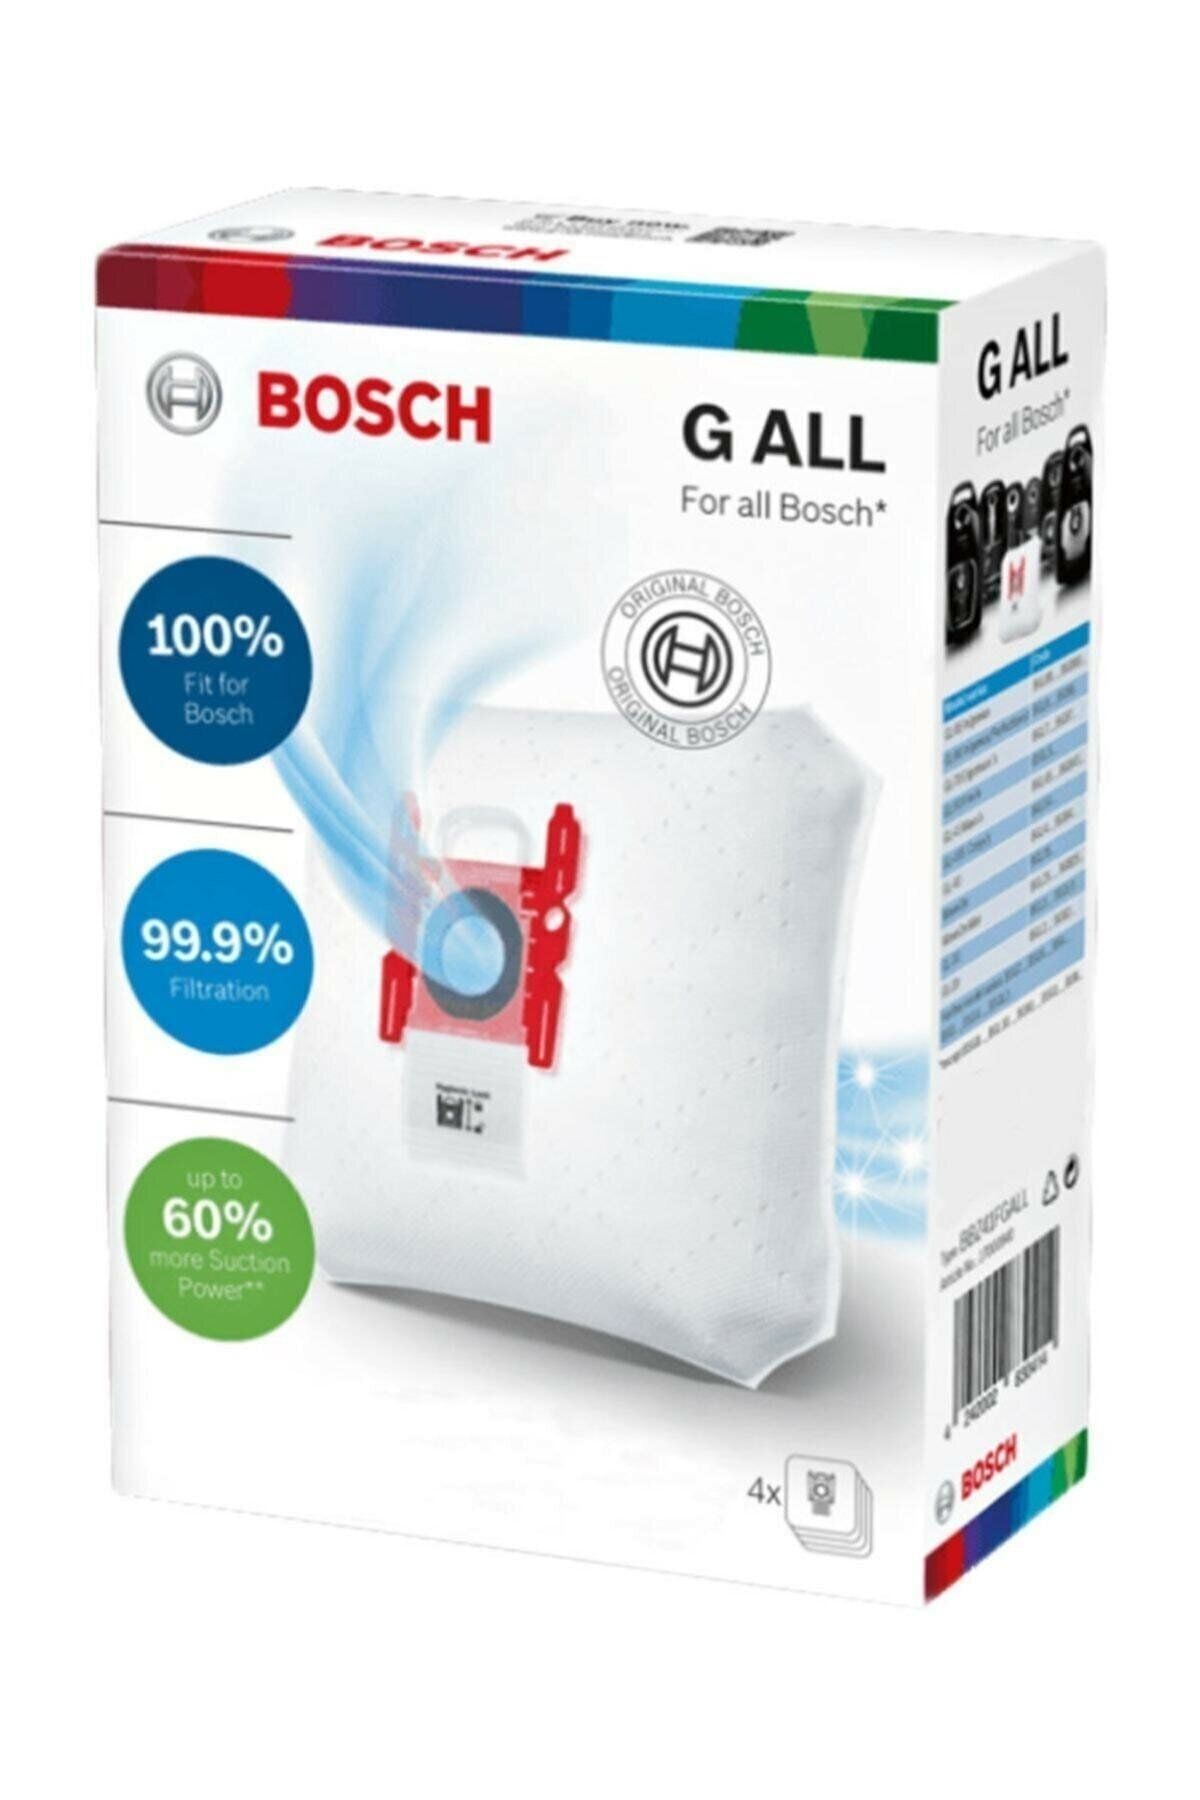 Bosch Bosh Bsa 2602 Süpürge G All Toz Torbası 4 Adet